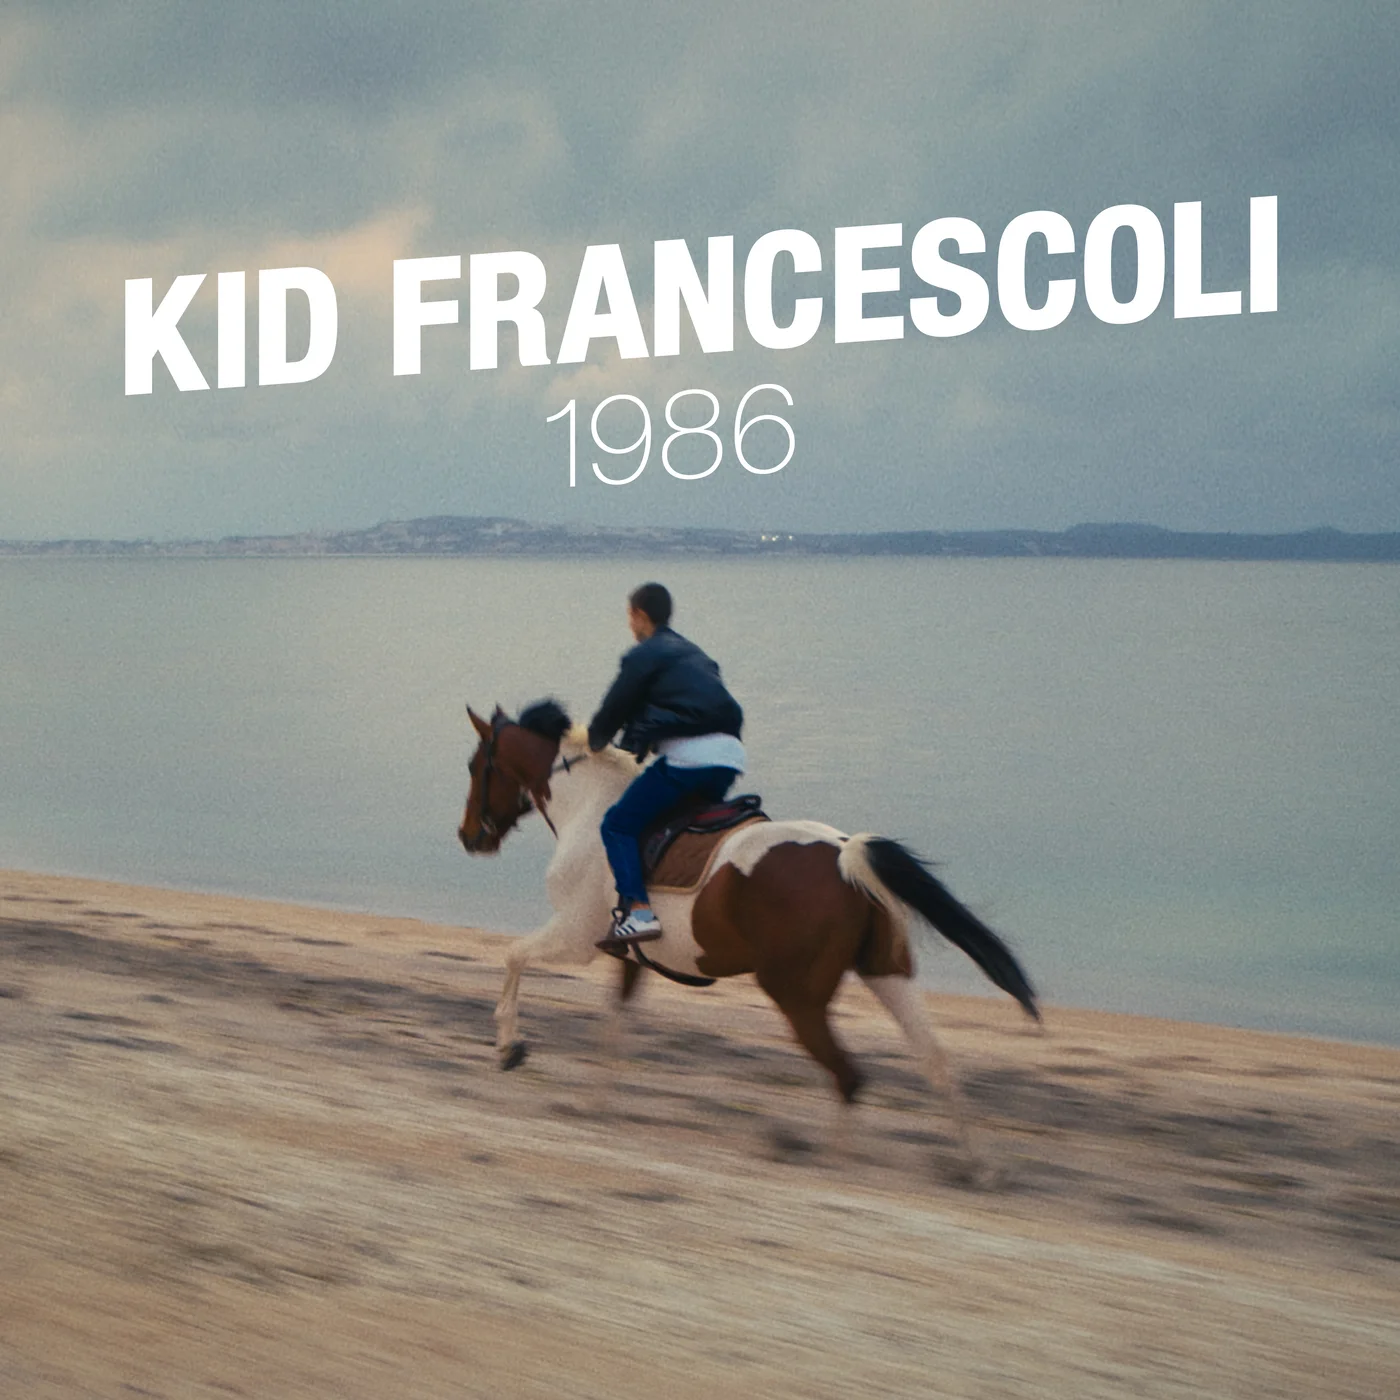 Kid Francescoli — 1986 cover artwork